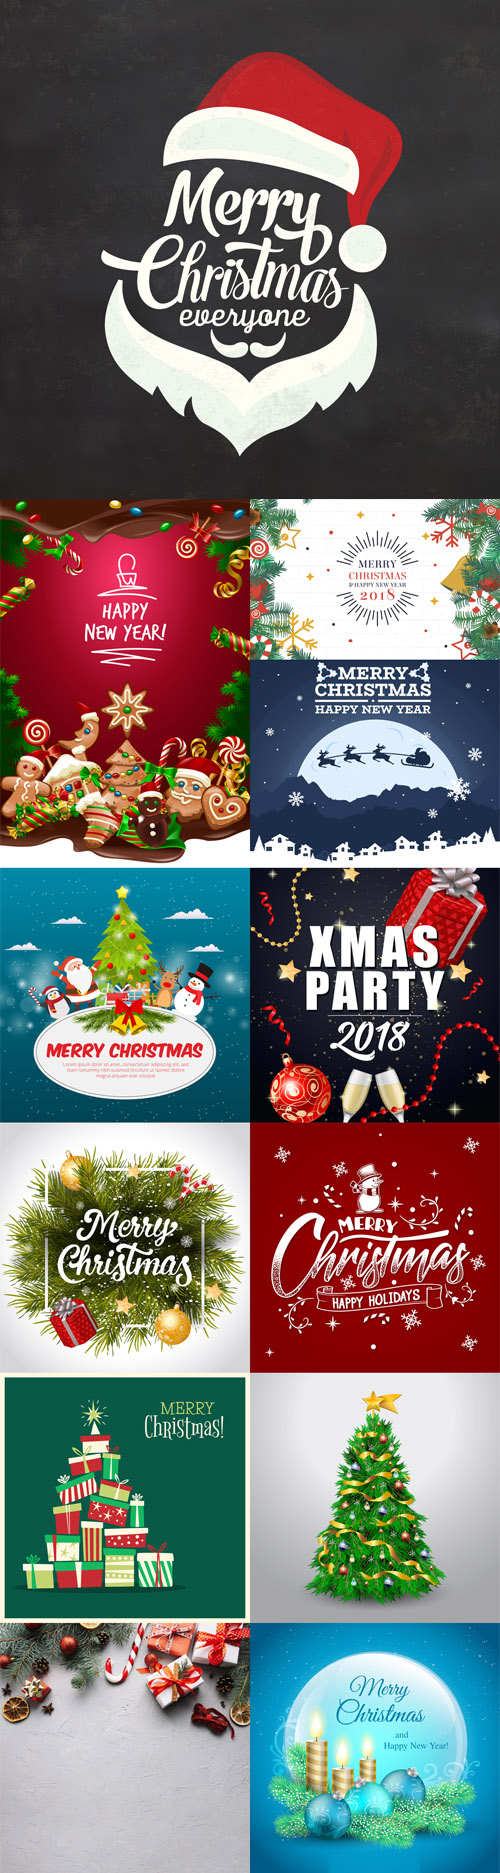 13 Merry Christmas Backgrounds Design in Vector